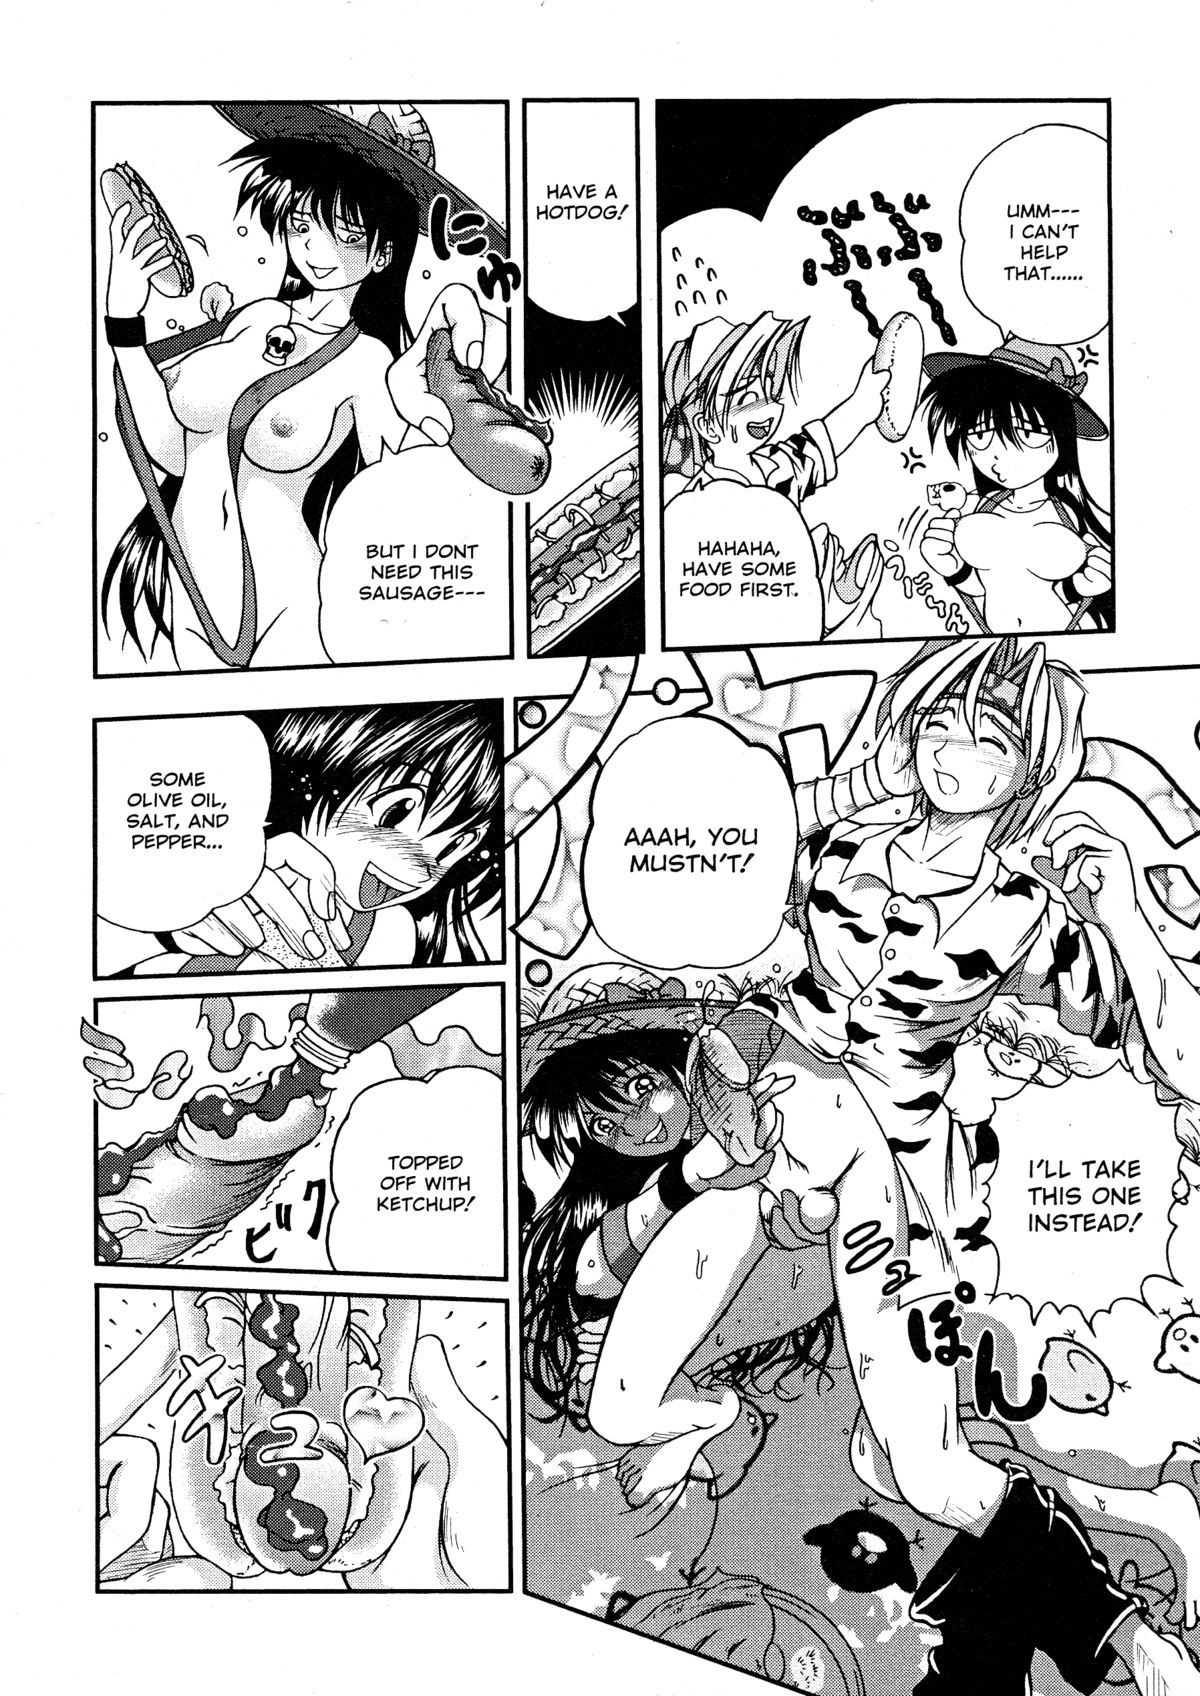 Flashbang!Hi-res 153 hentai manga